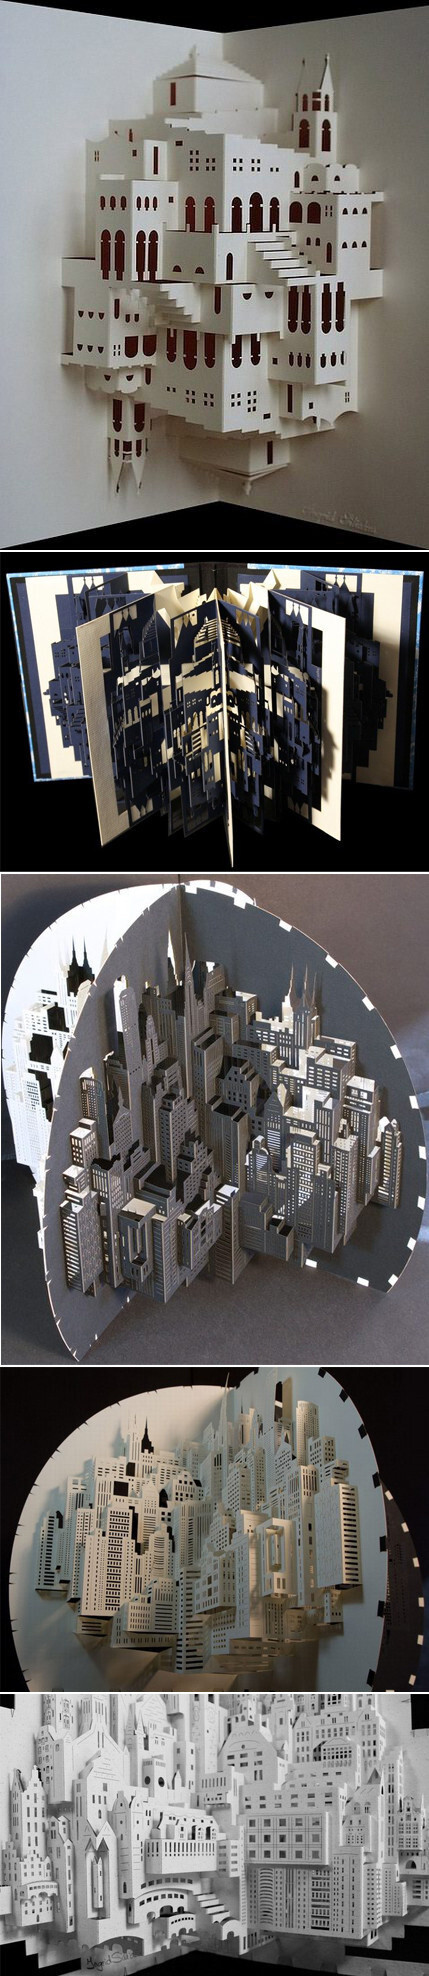 siliakus对建筑纸模型颇有研究,她最擅长制作建筑大师的作品以及复杂